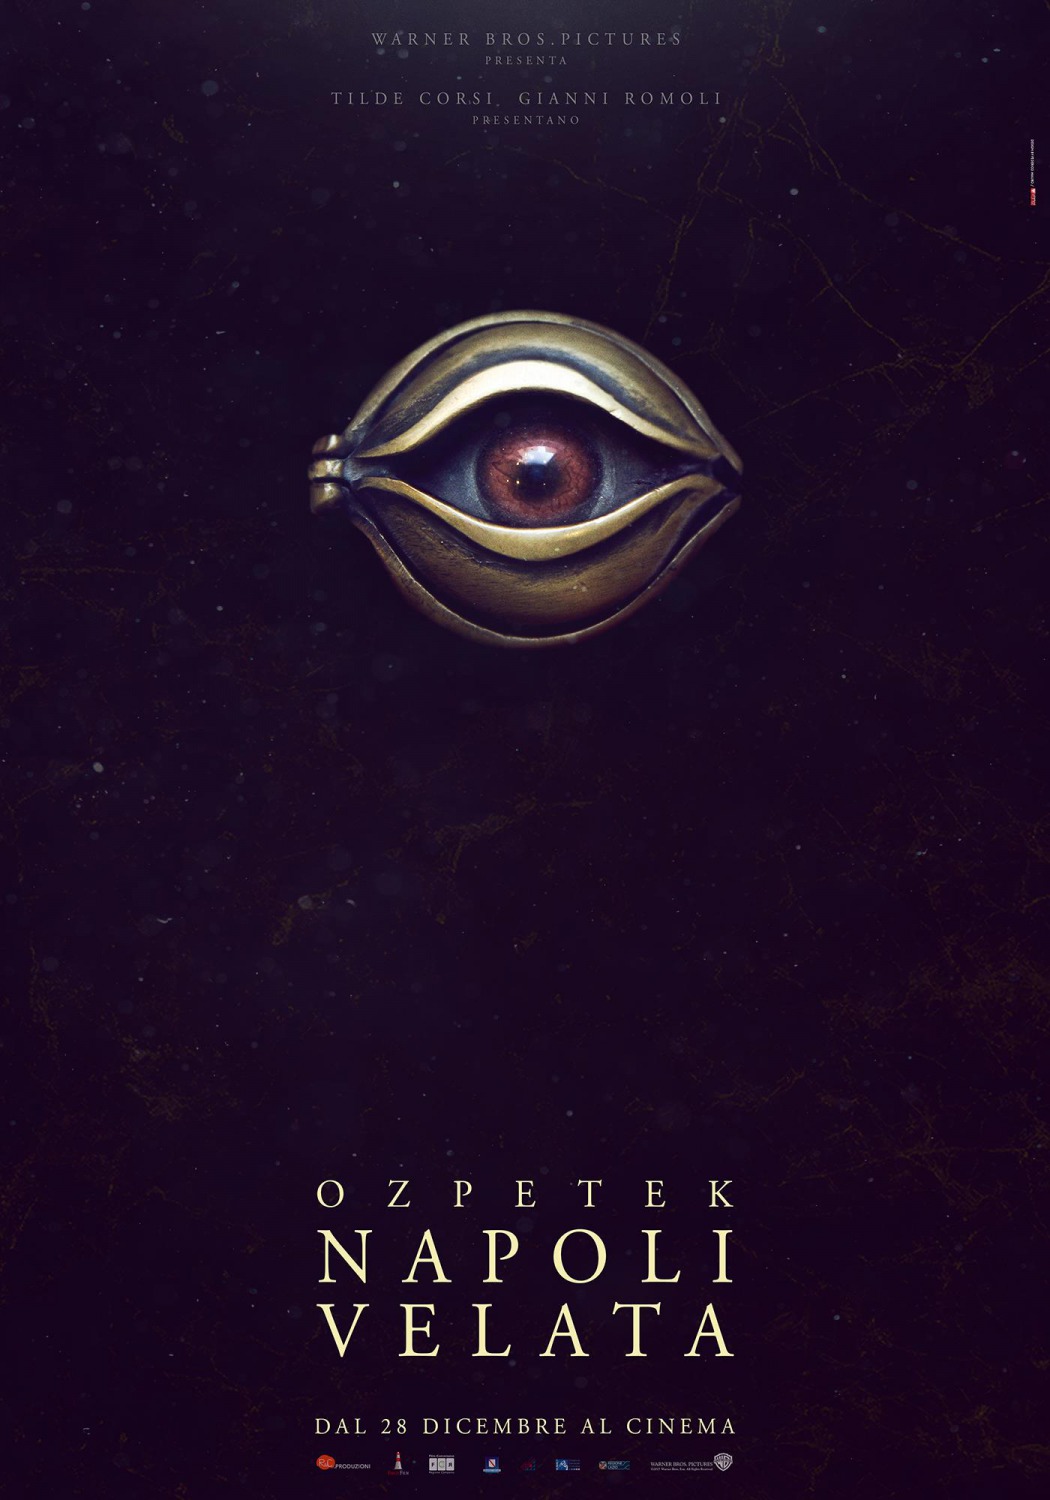 Extra Large Movie Poster Image for Napoli velata (#1 of 4)